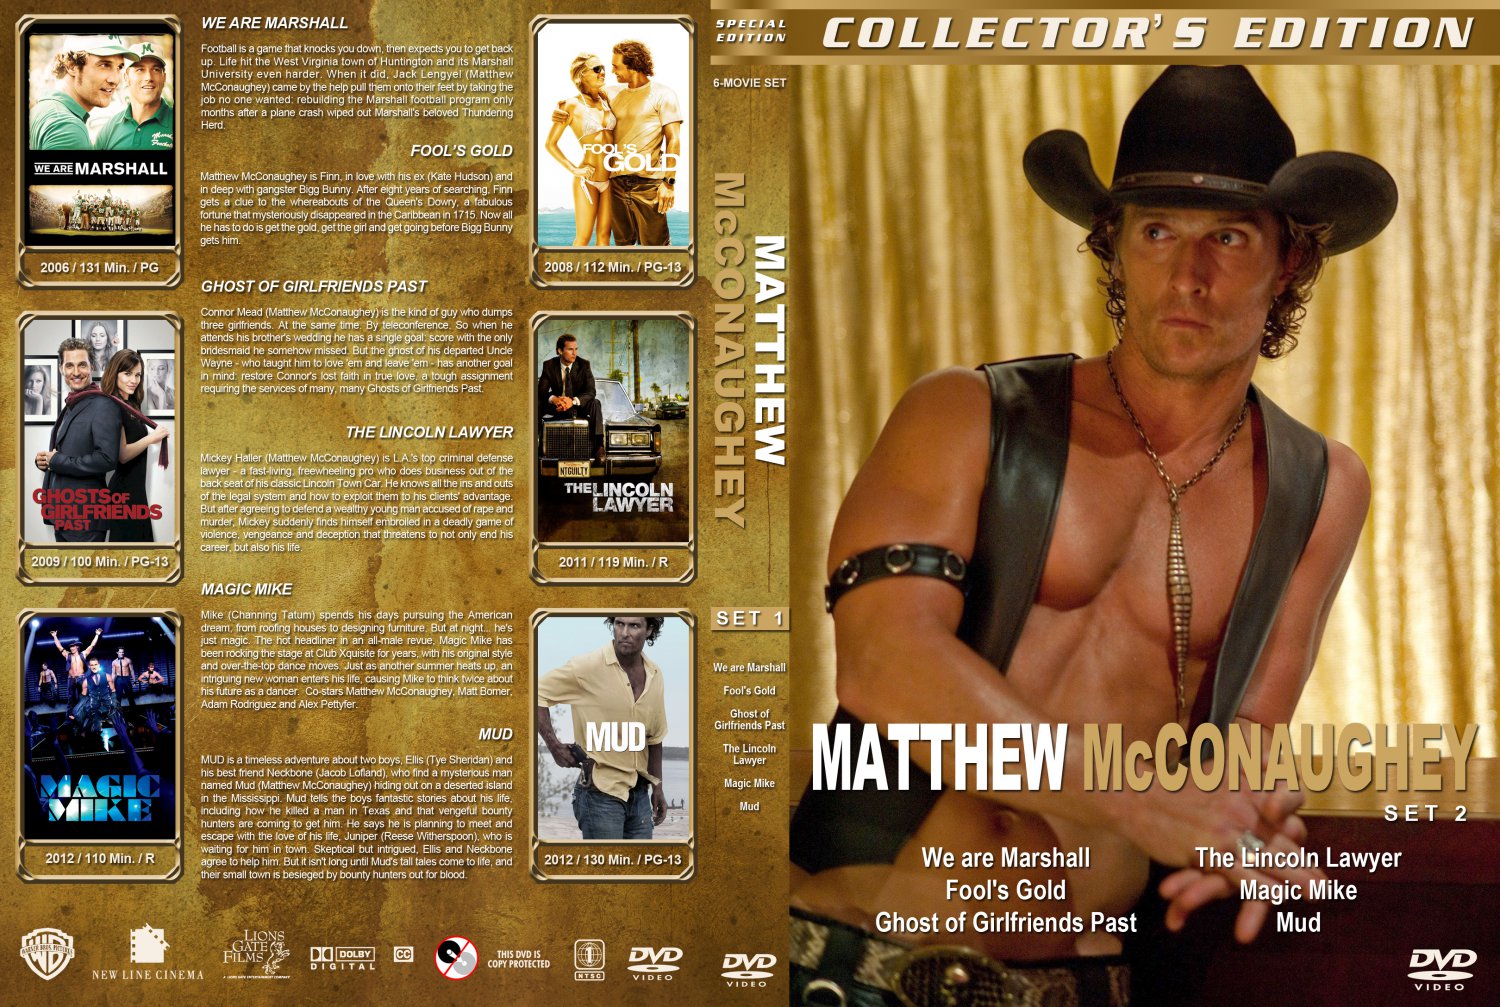 Matthew McConaughey Collection  Set 2  Movie DVD Custom Covers  MMC